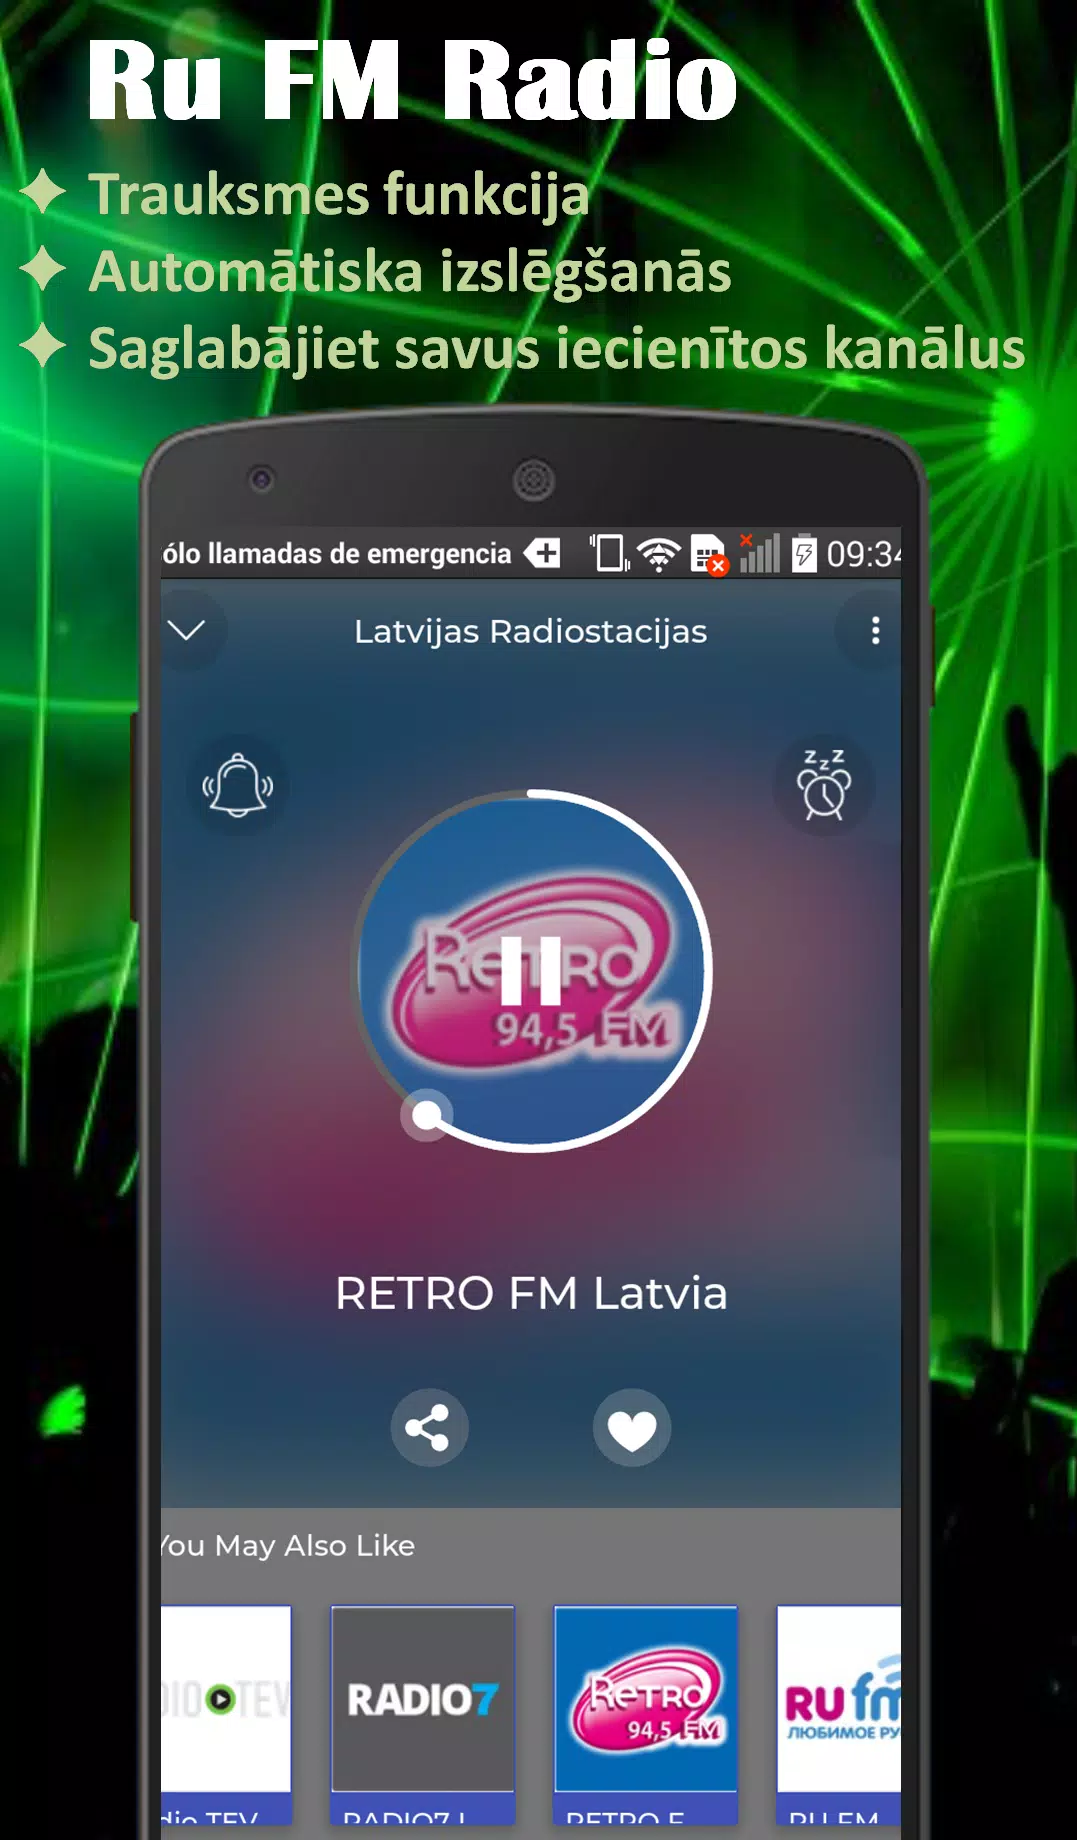 Radio Ru Fm Live Latvia for Android - APK Download